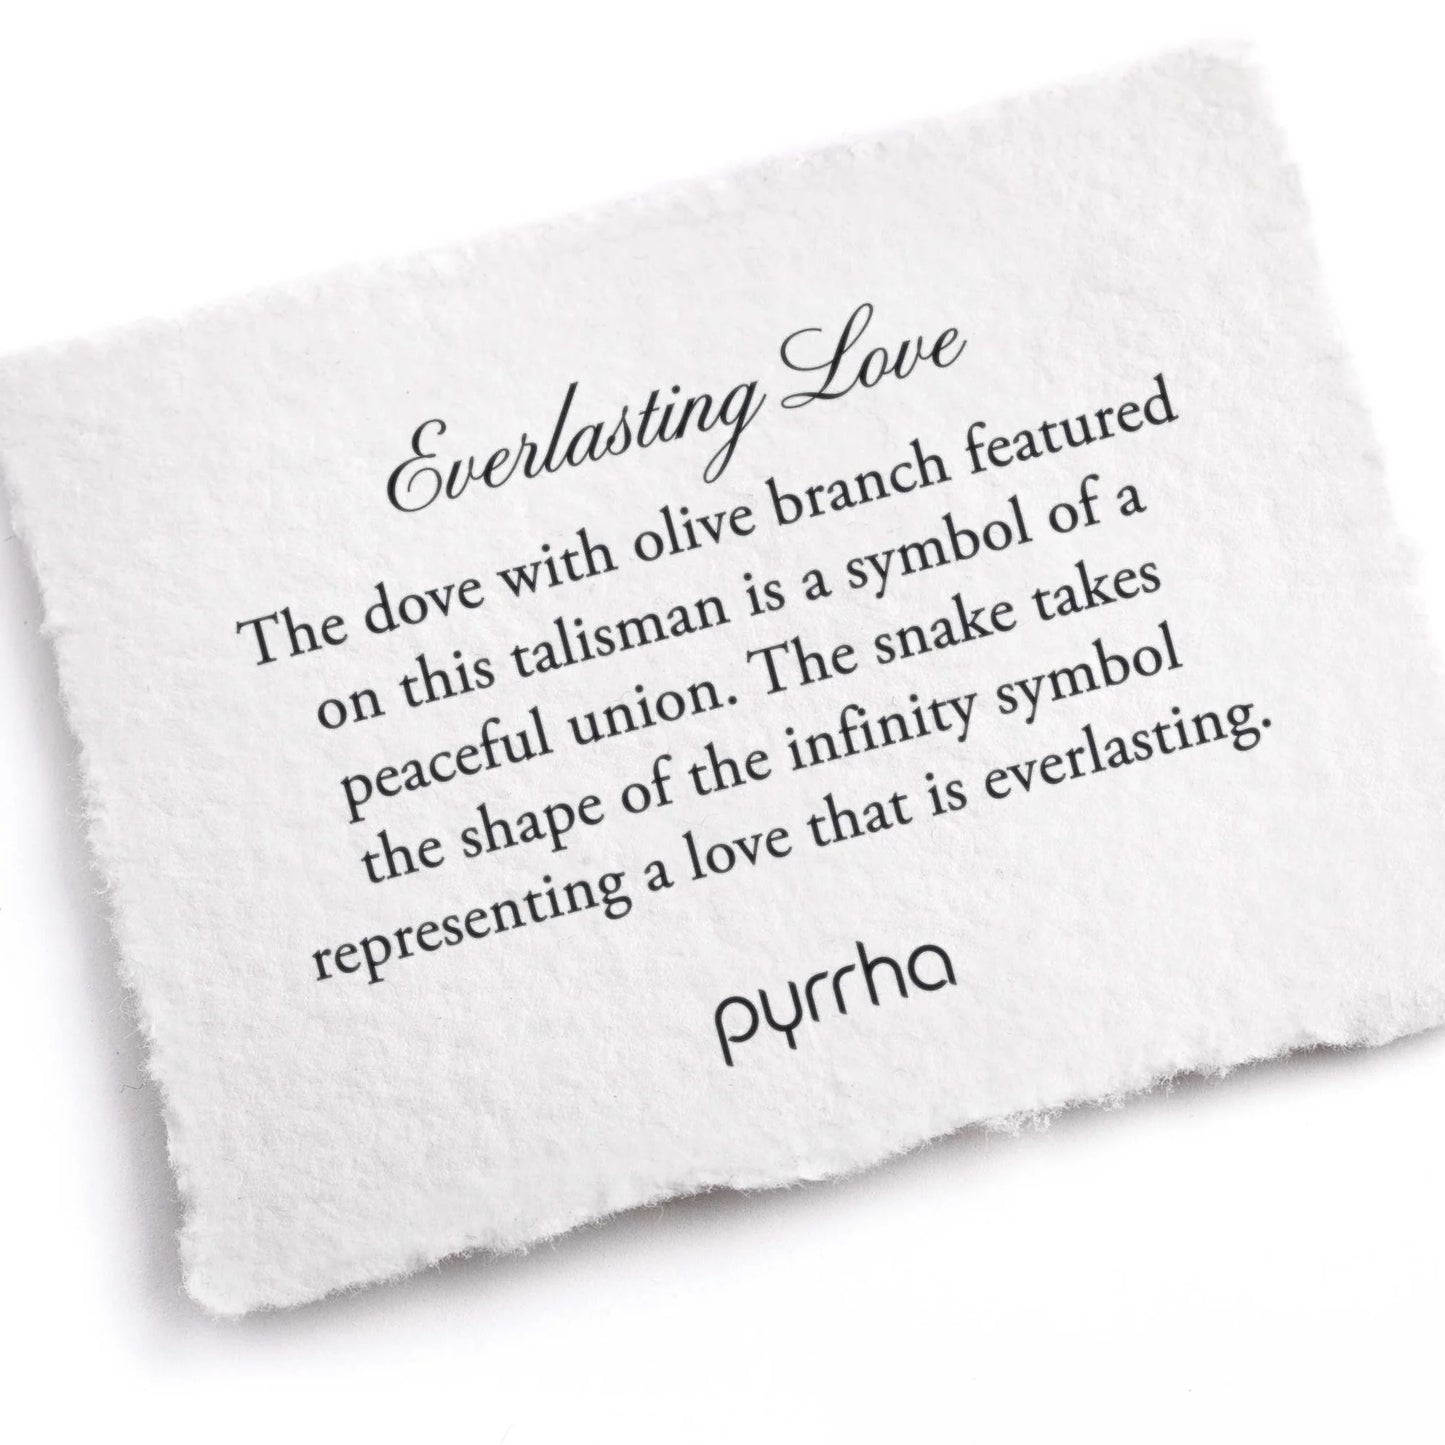 Everlasting Love Talisman Necklace by Pyrrha